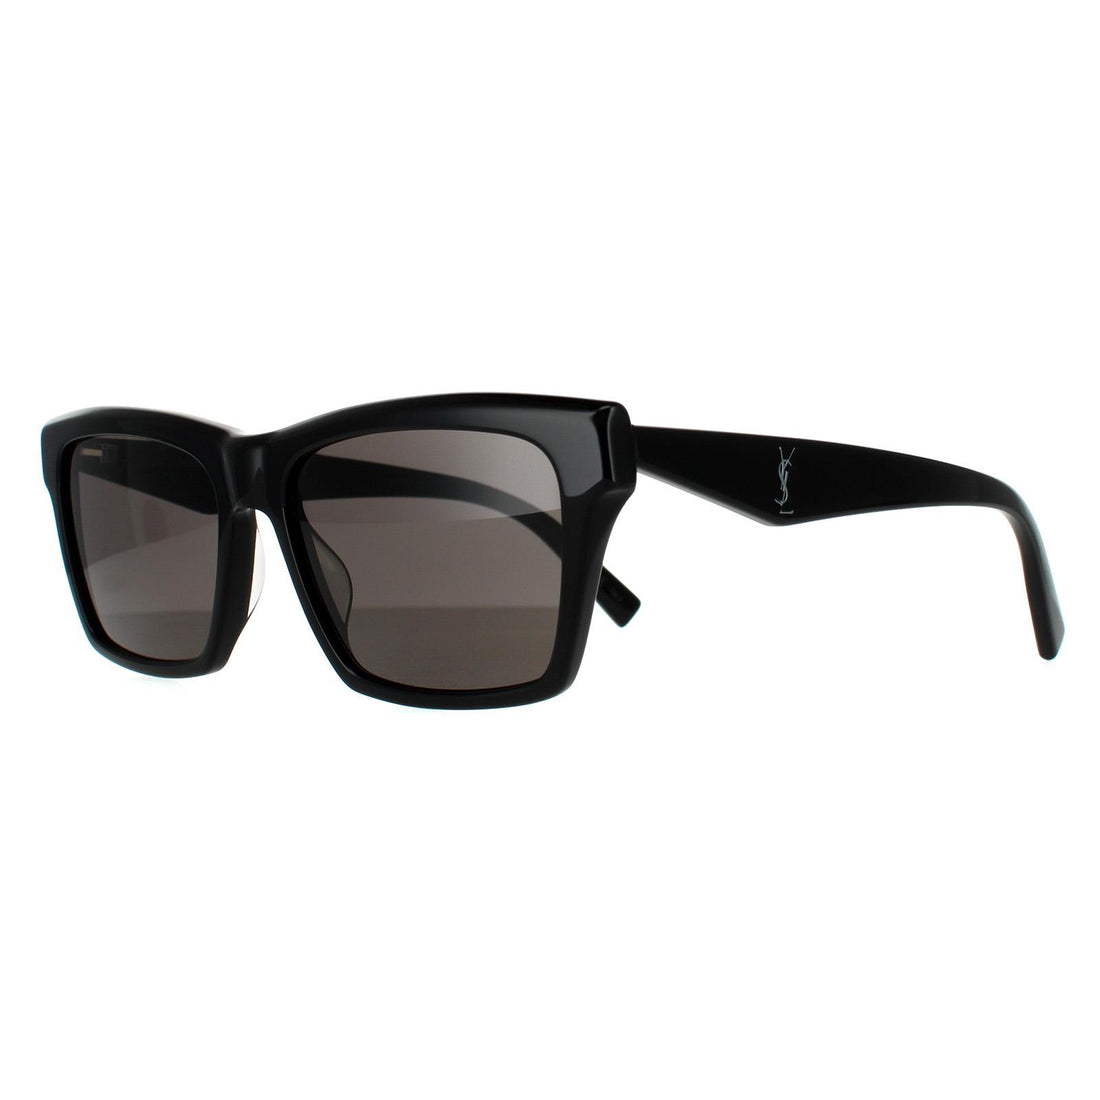 Saint Laurent Sunglasses SL M104 002 Shiny Black Dark Grey